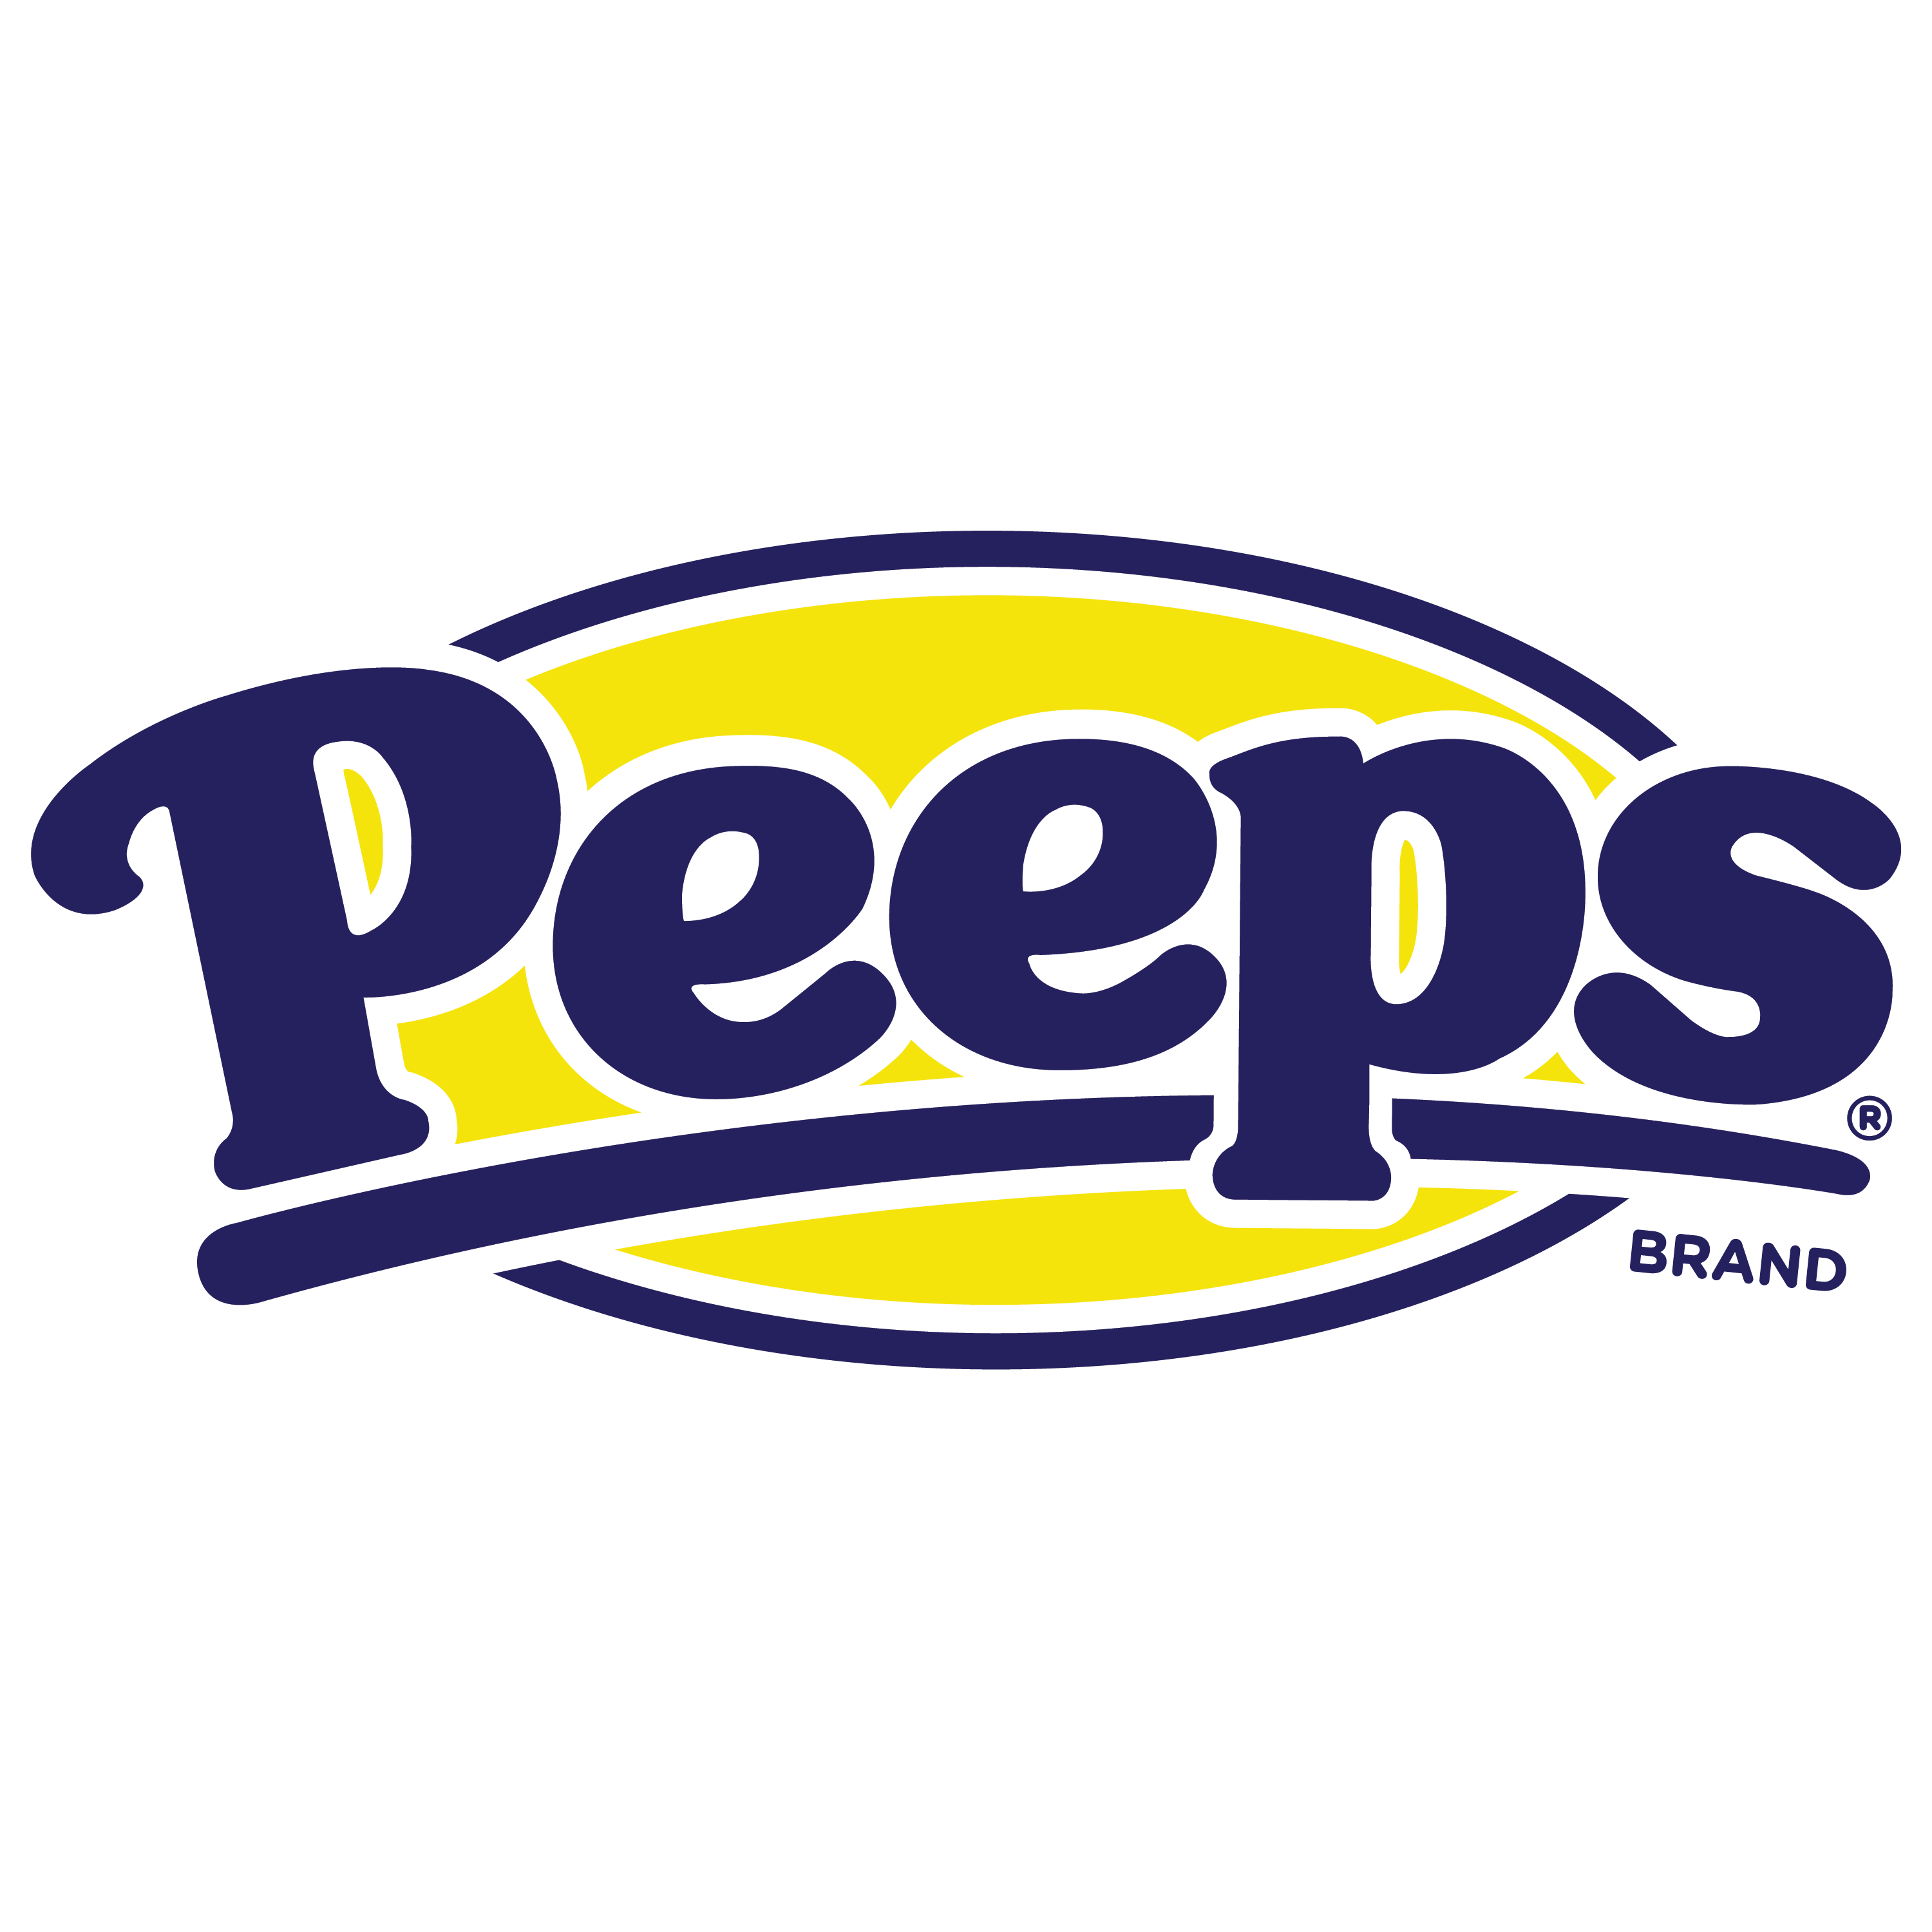 PEEPS Brand Marshmallow products Logo